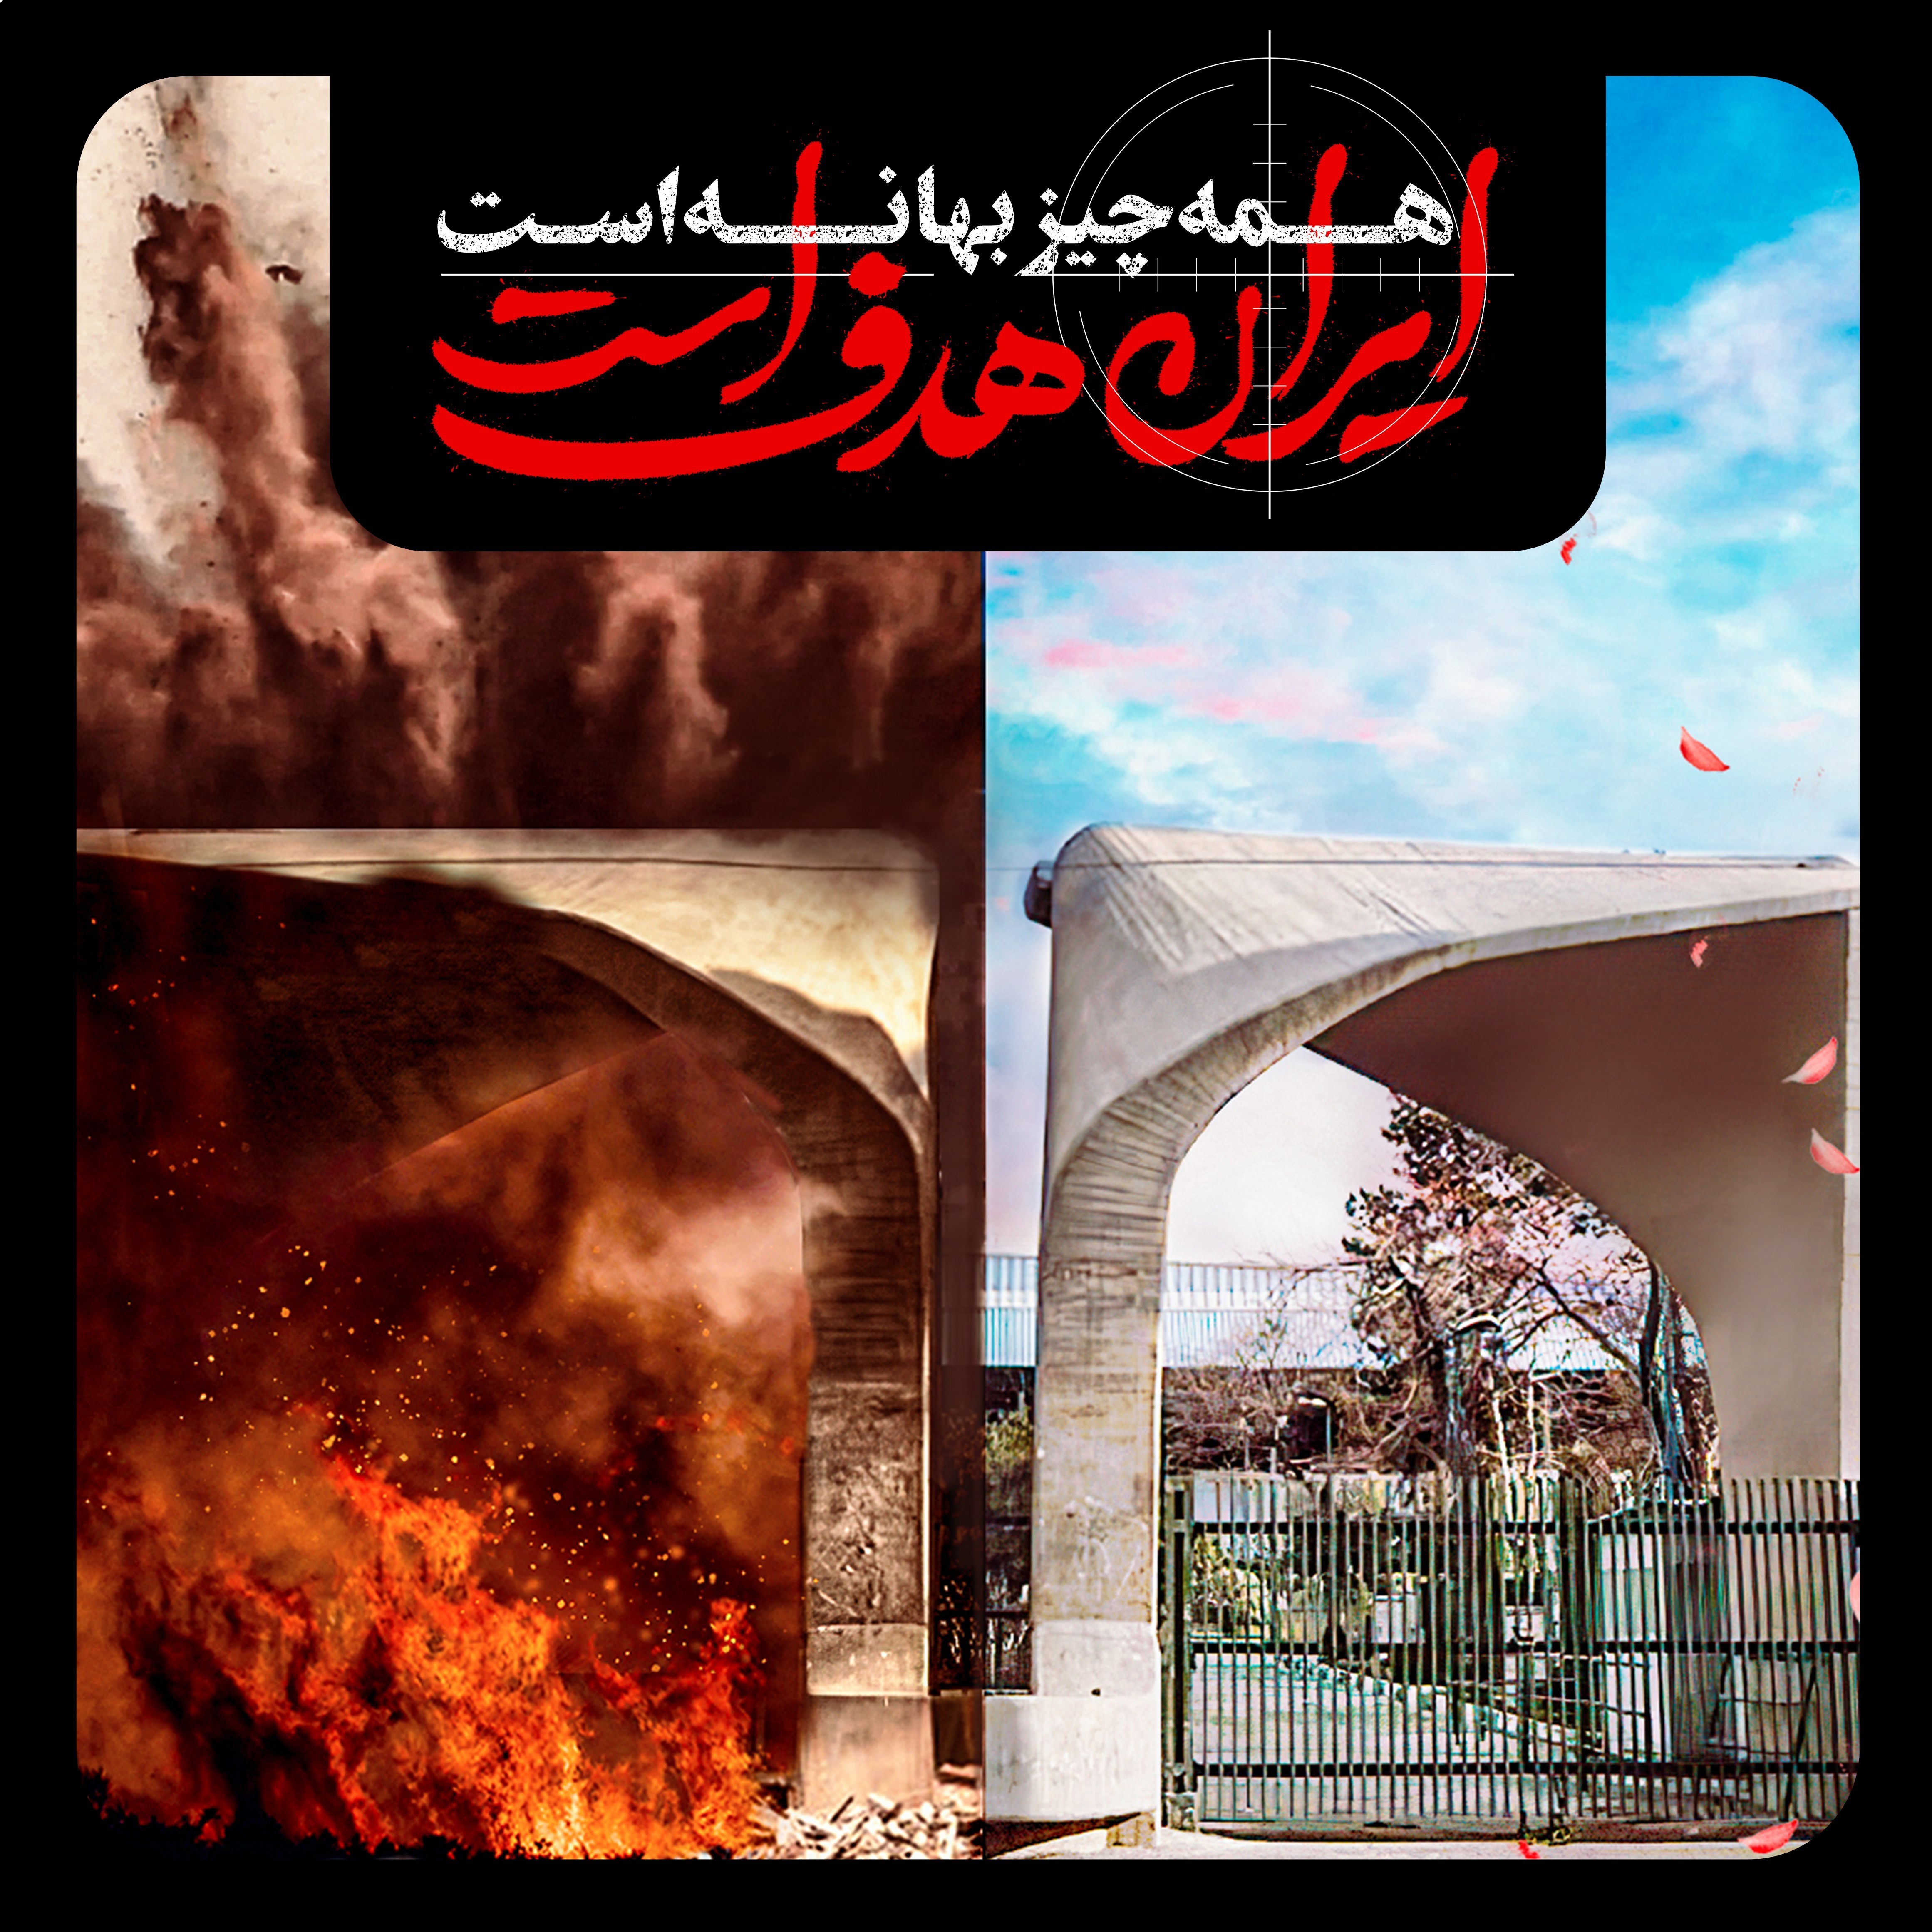 خانه طراحان انقلاب اسلامی , اغتشاشات 401 , عکس , گرافیک , 